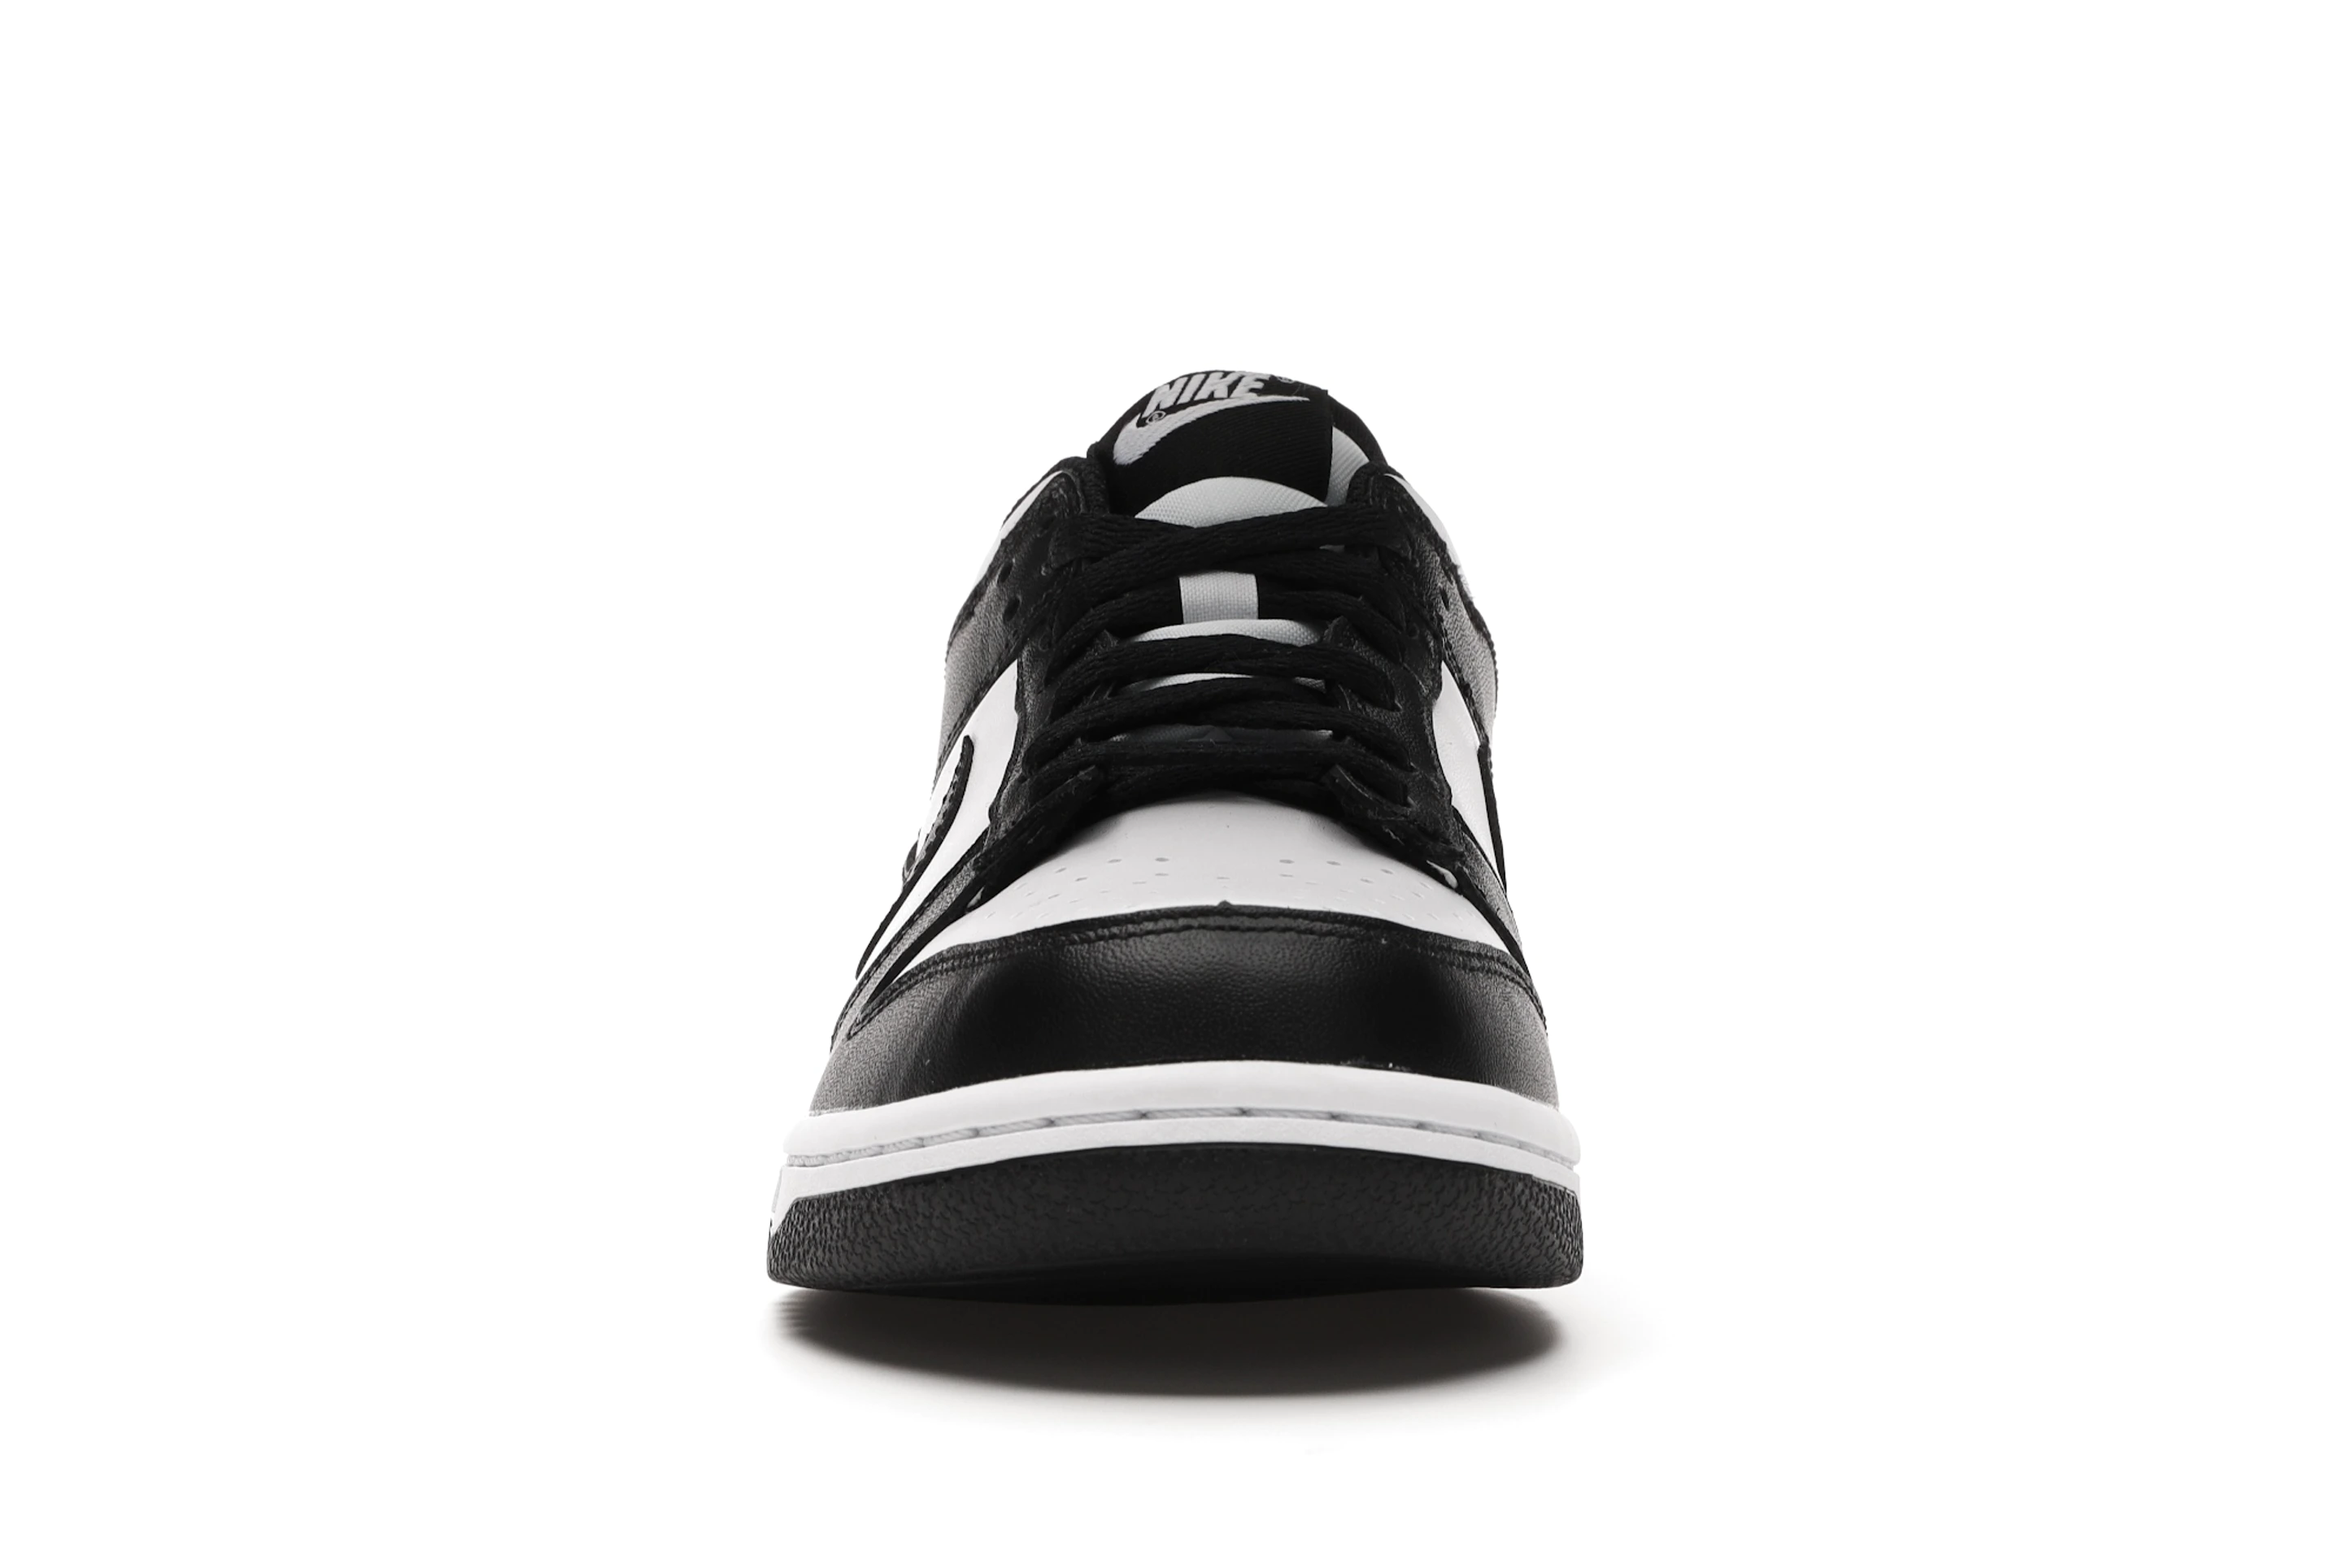 Nike Dunk Low Retro White Black (GS)